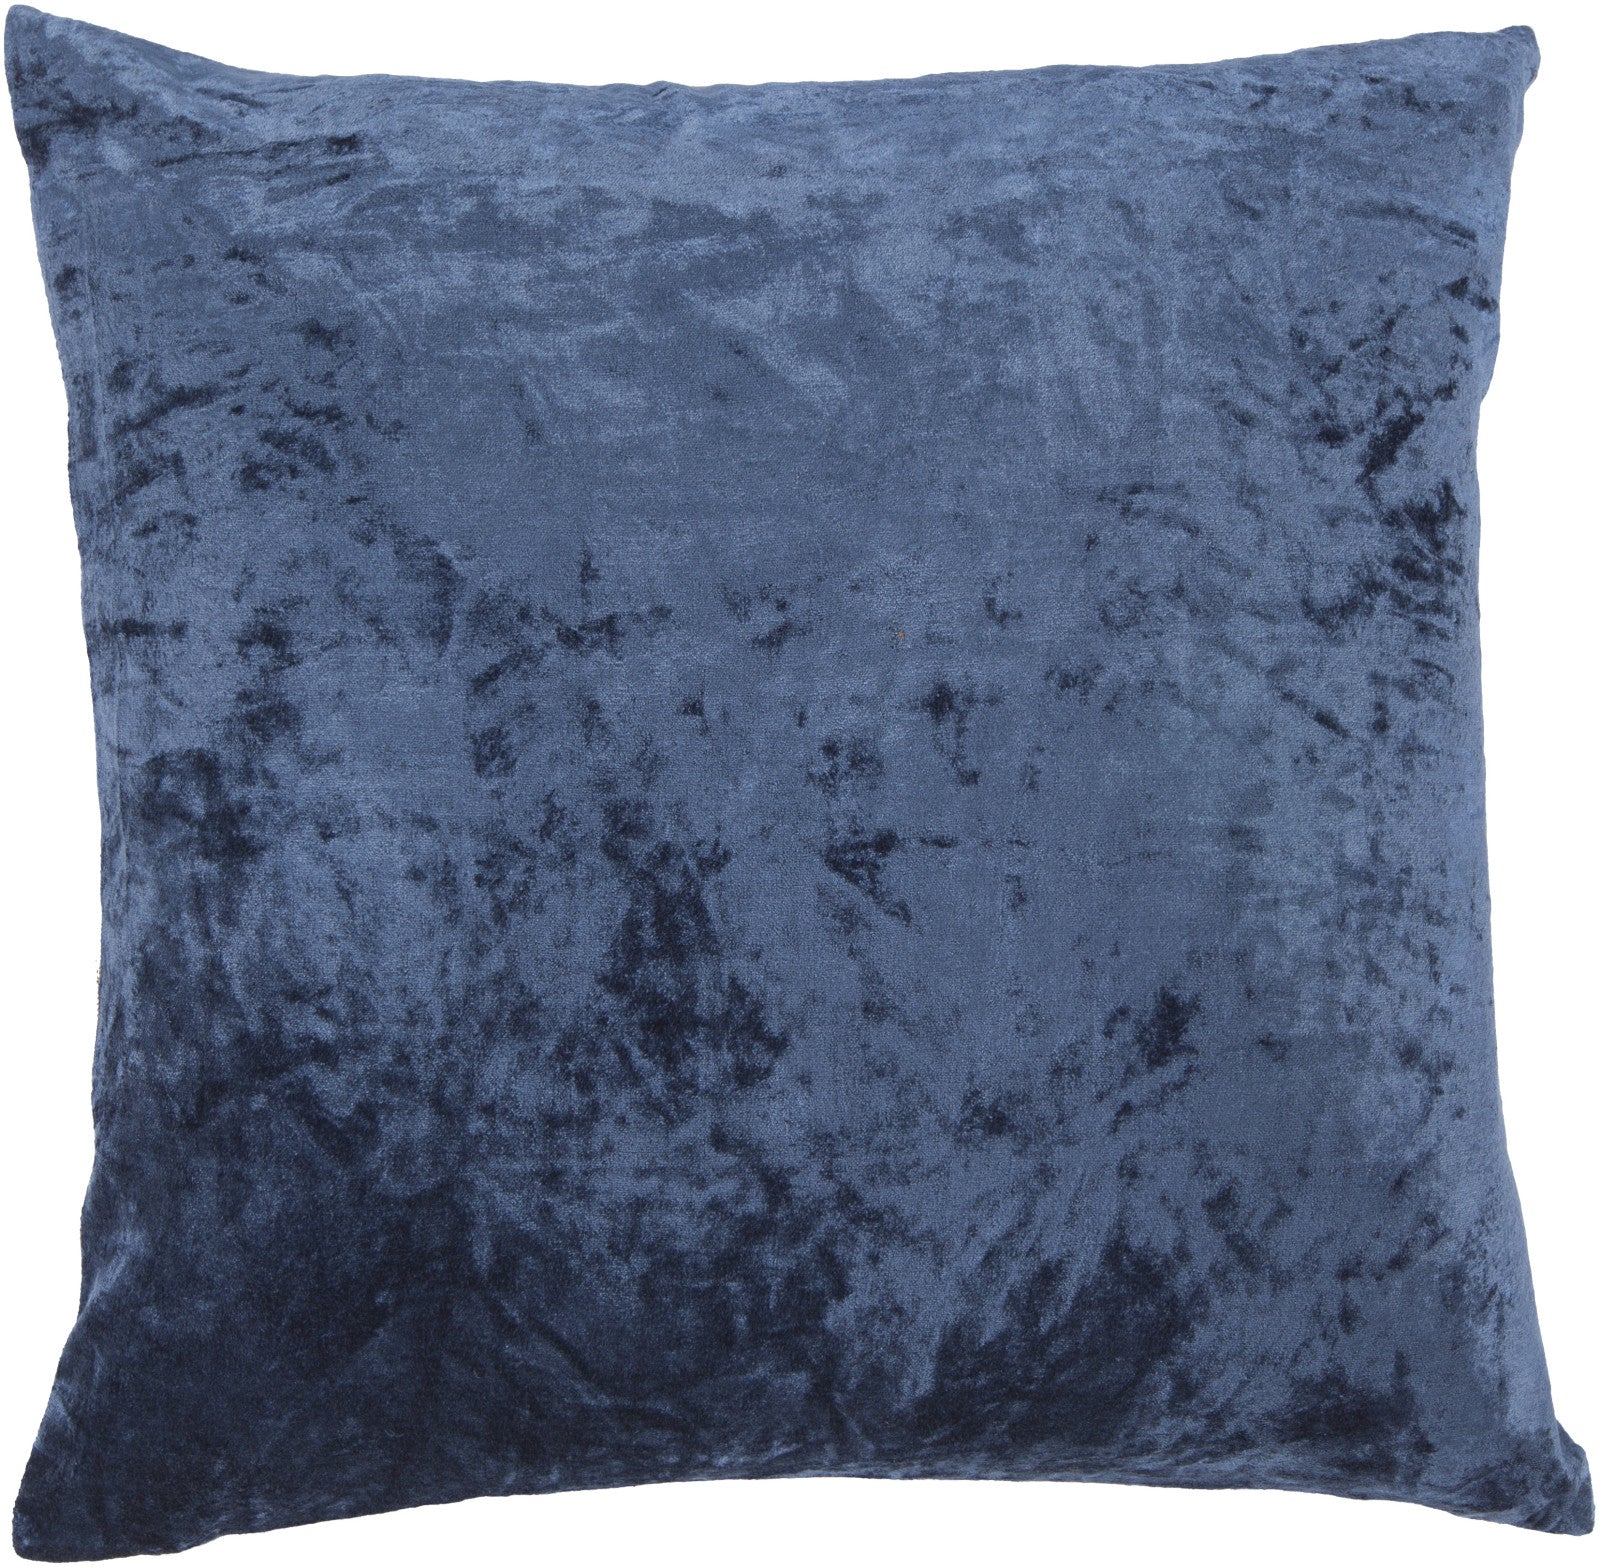 Chandra Pillows CUS-28046 Blue main image